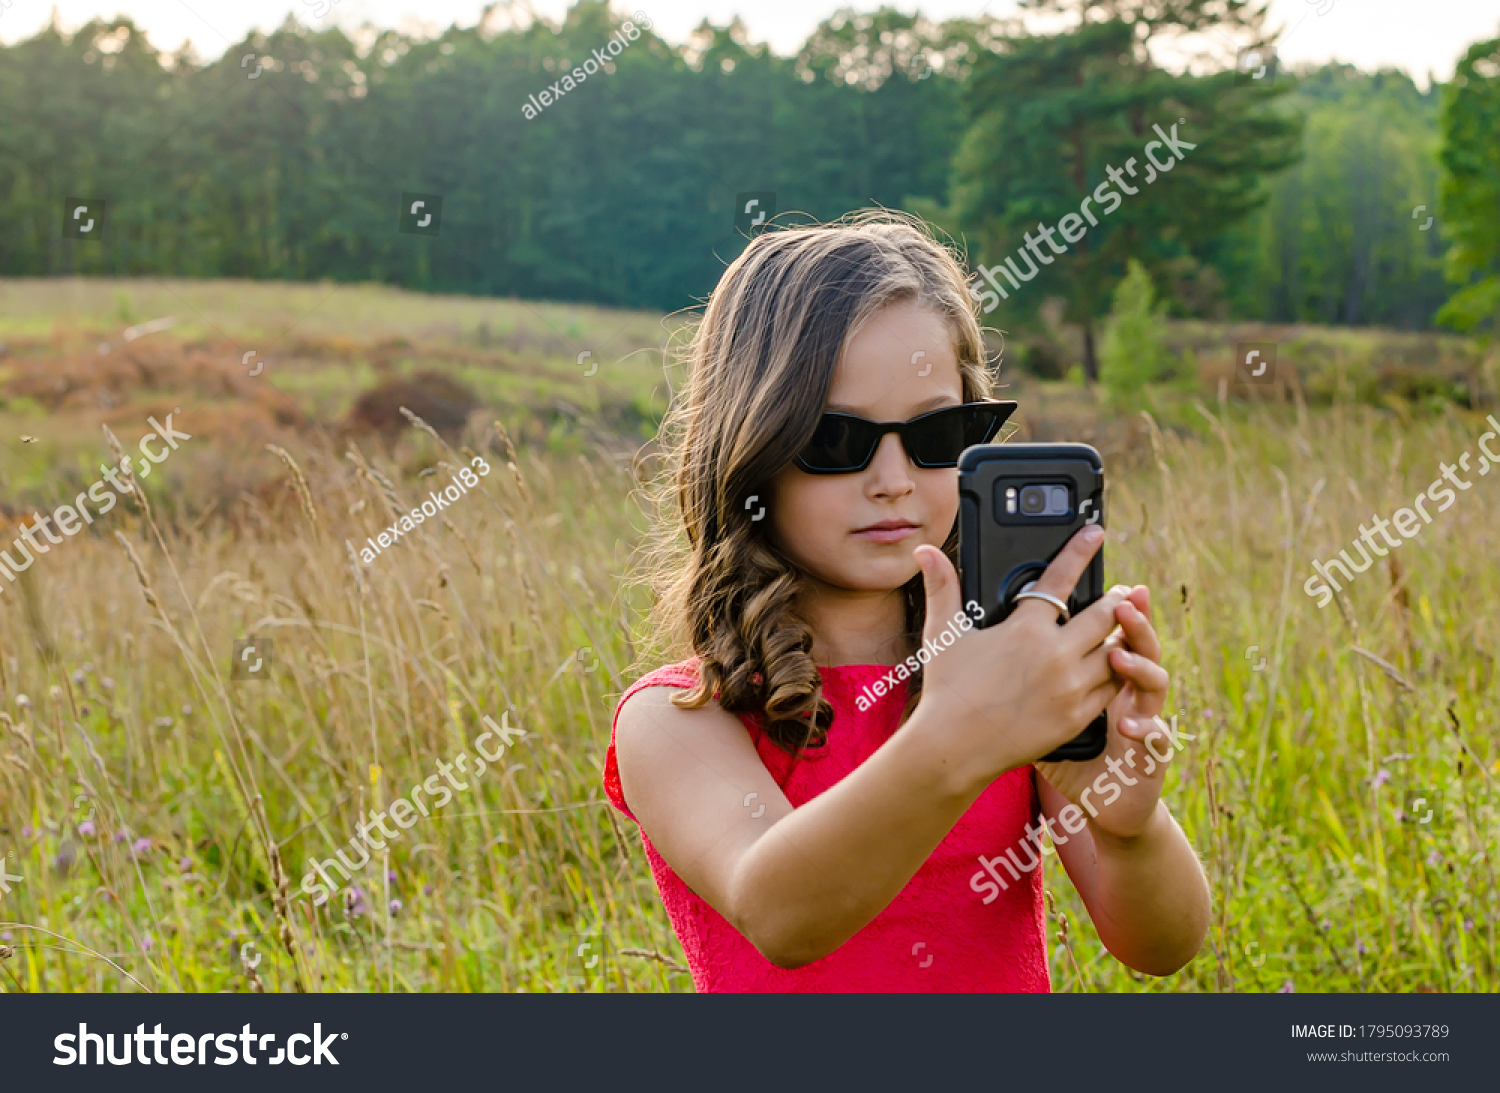 Teen Girls With Glasses Selfie